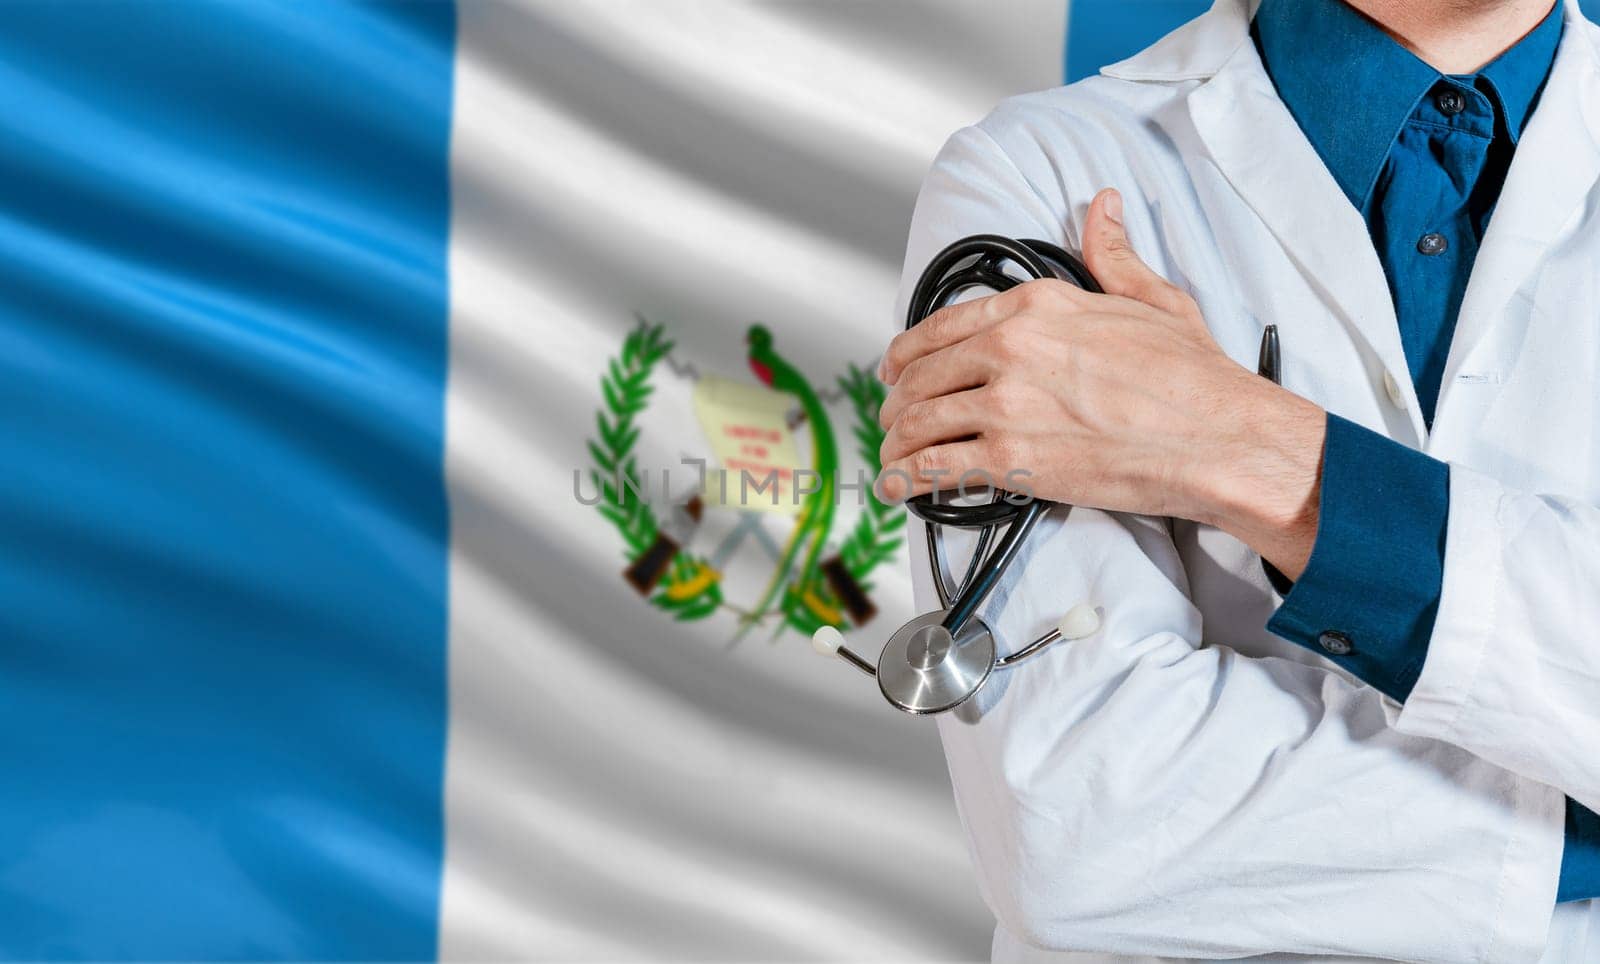 Doctor with stethoscope on guatemala flag. Health and care with the flag of Guatemala. Guatemala national health concept, Doctor arm with stethoscope on Guatemala flag by isaiphoto